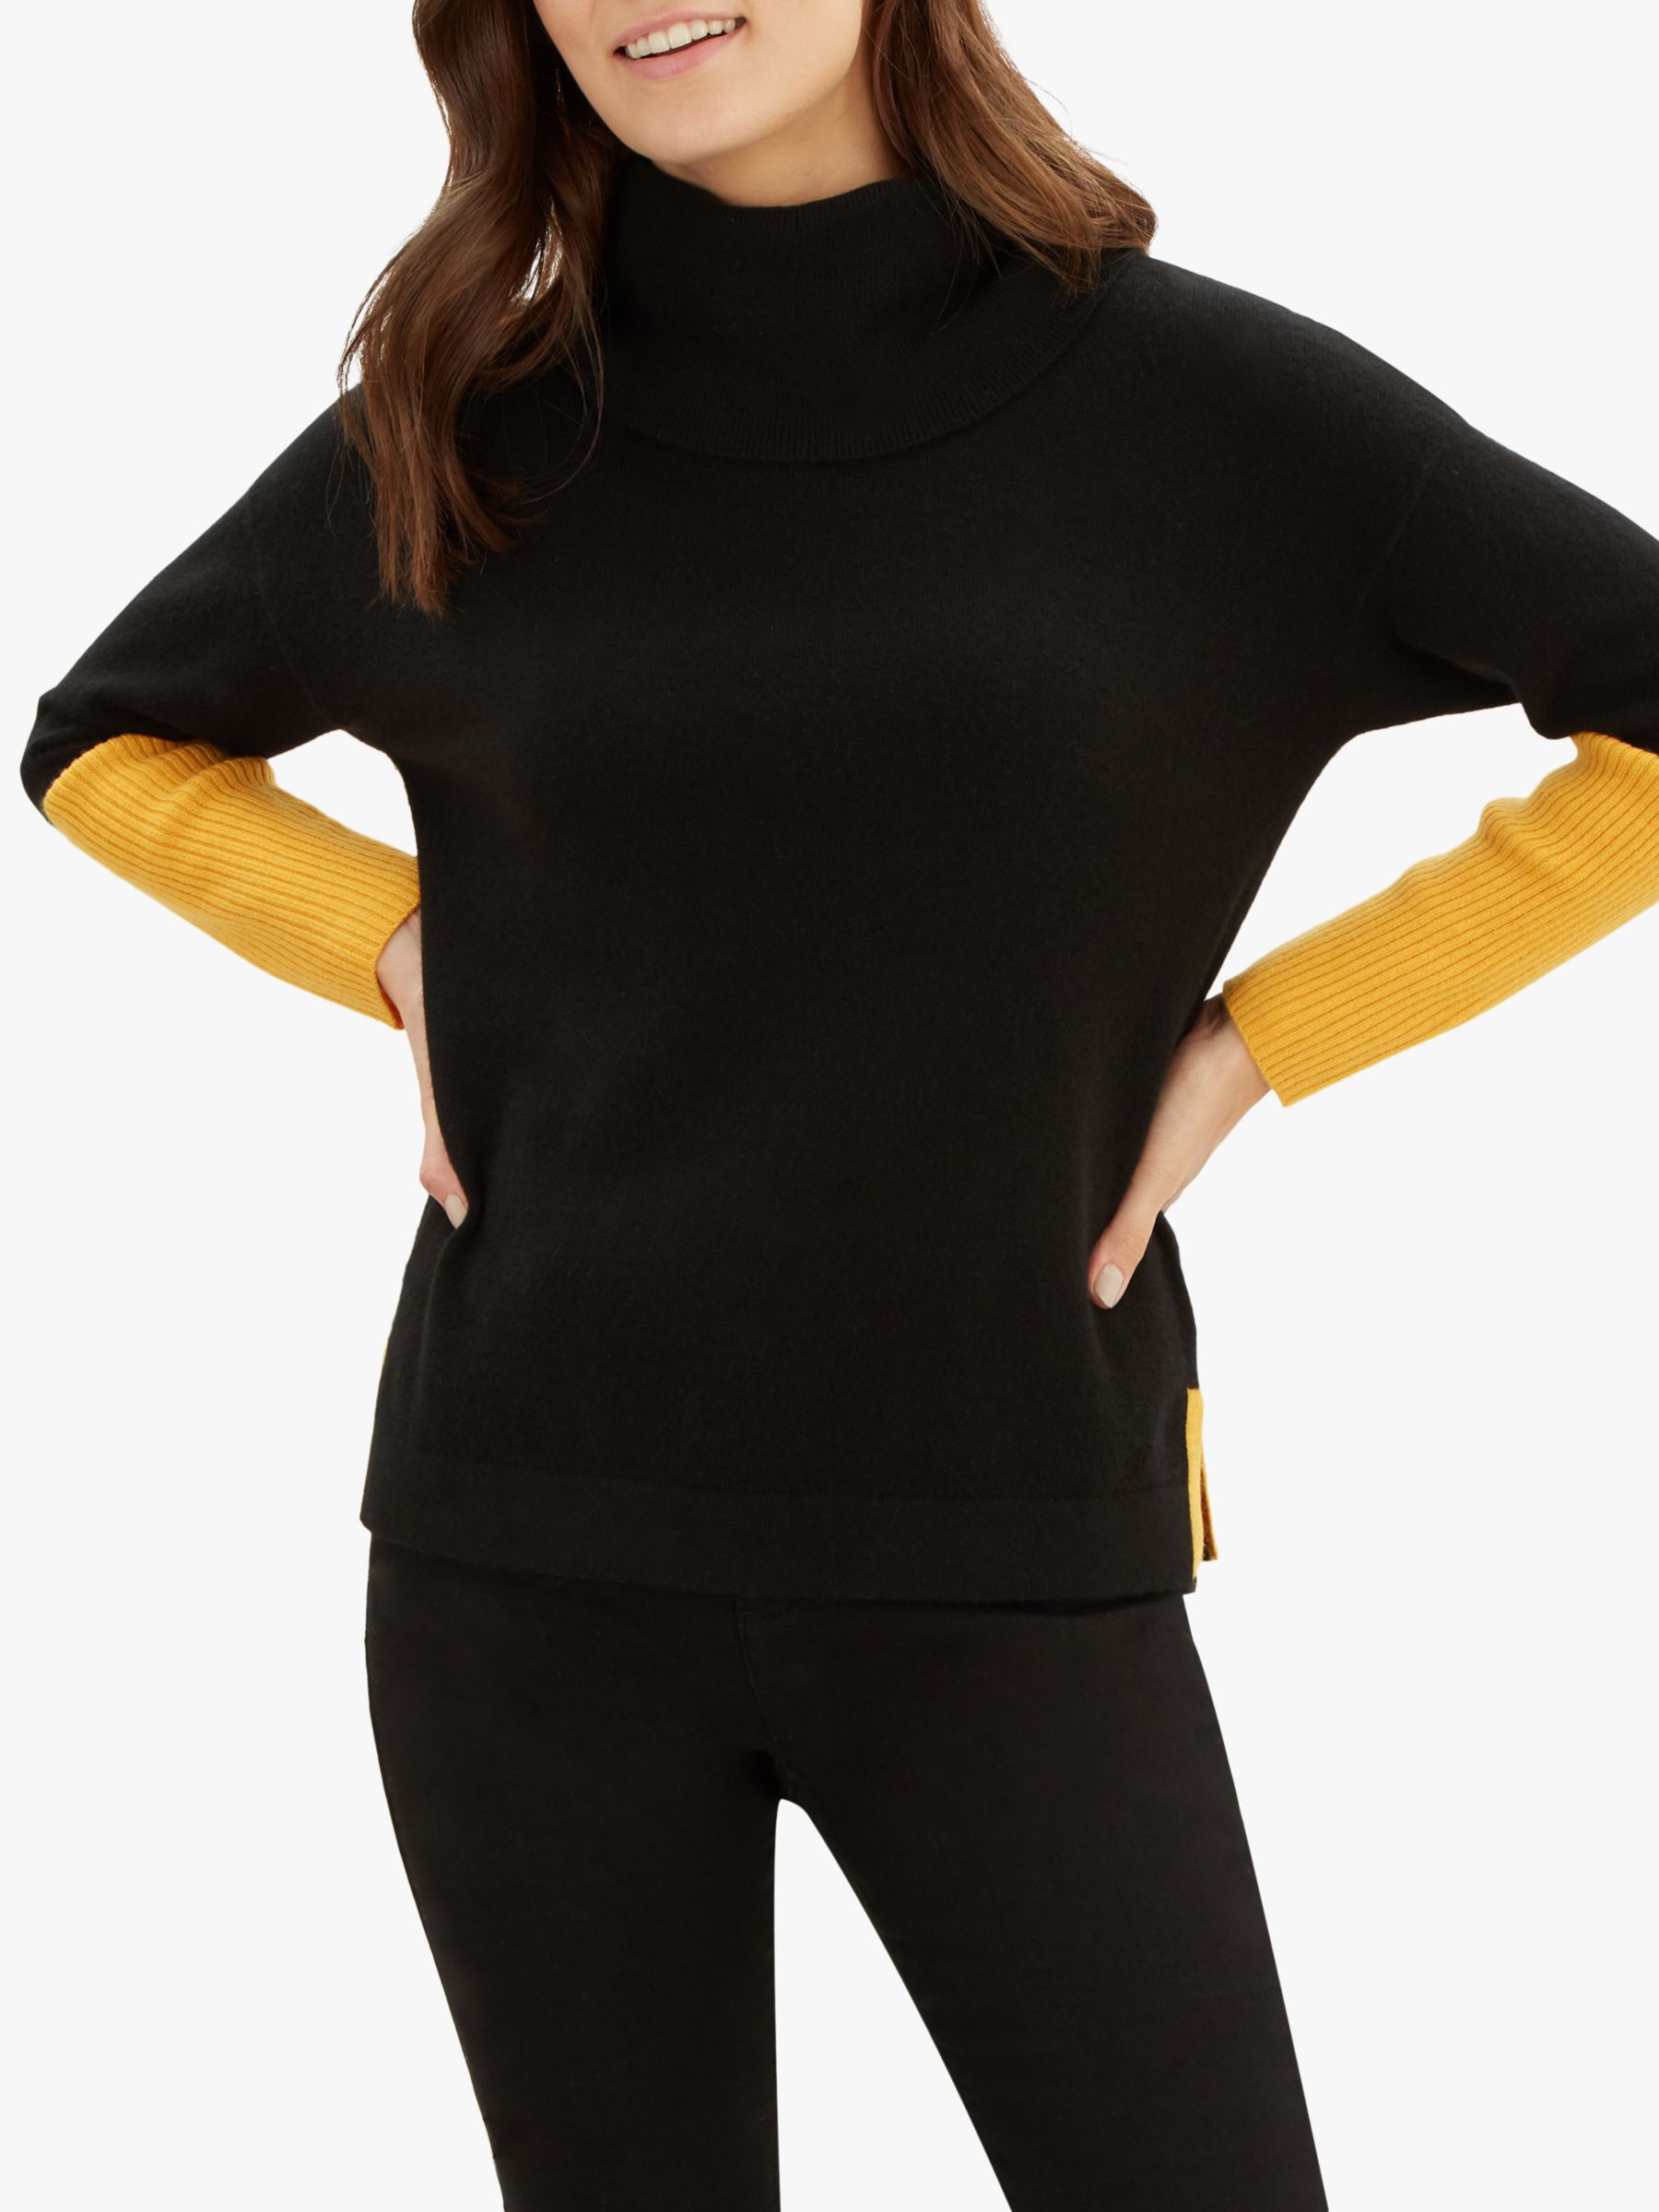 Jaeger Cashmere Colour Block Sweater, Black/Gold